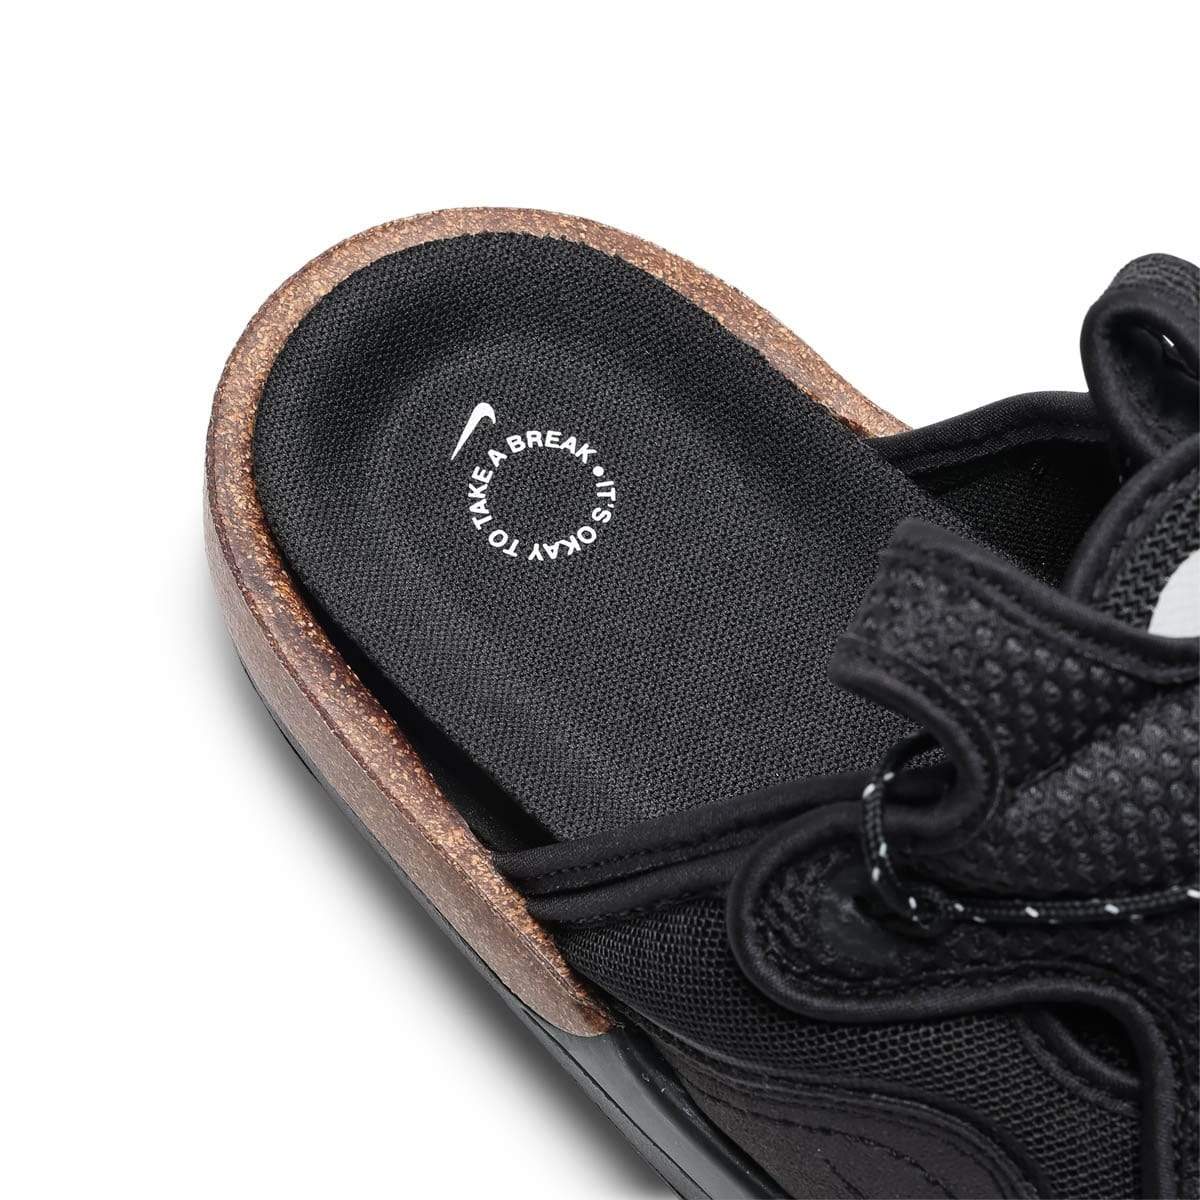 Nike Sandals OFFLINE 2.0